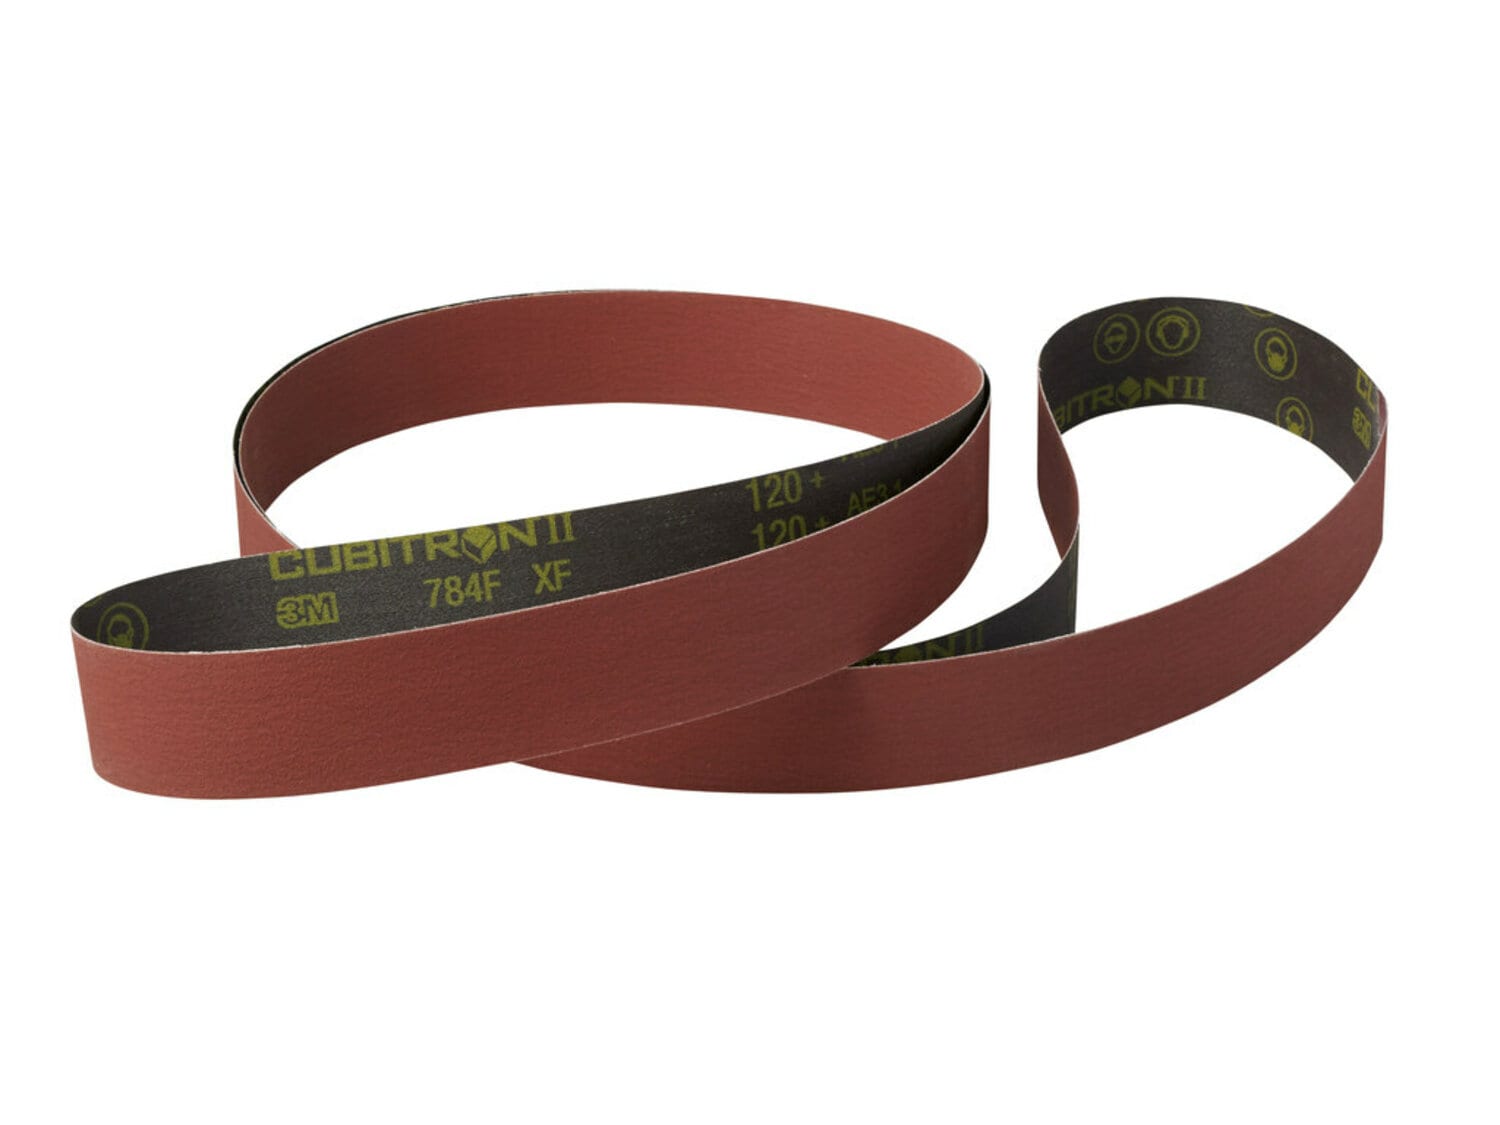 7100227332 - 3M Cubitron ll Cloth Belt 784F, 80+ YF-weight, 3 in x 72 in, Film-lok,
Single-flex